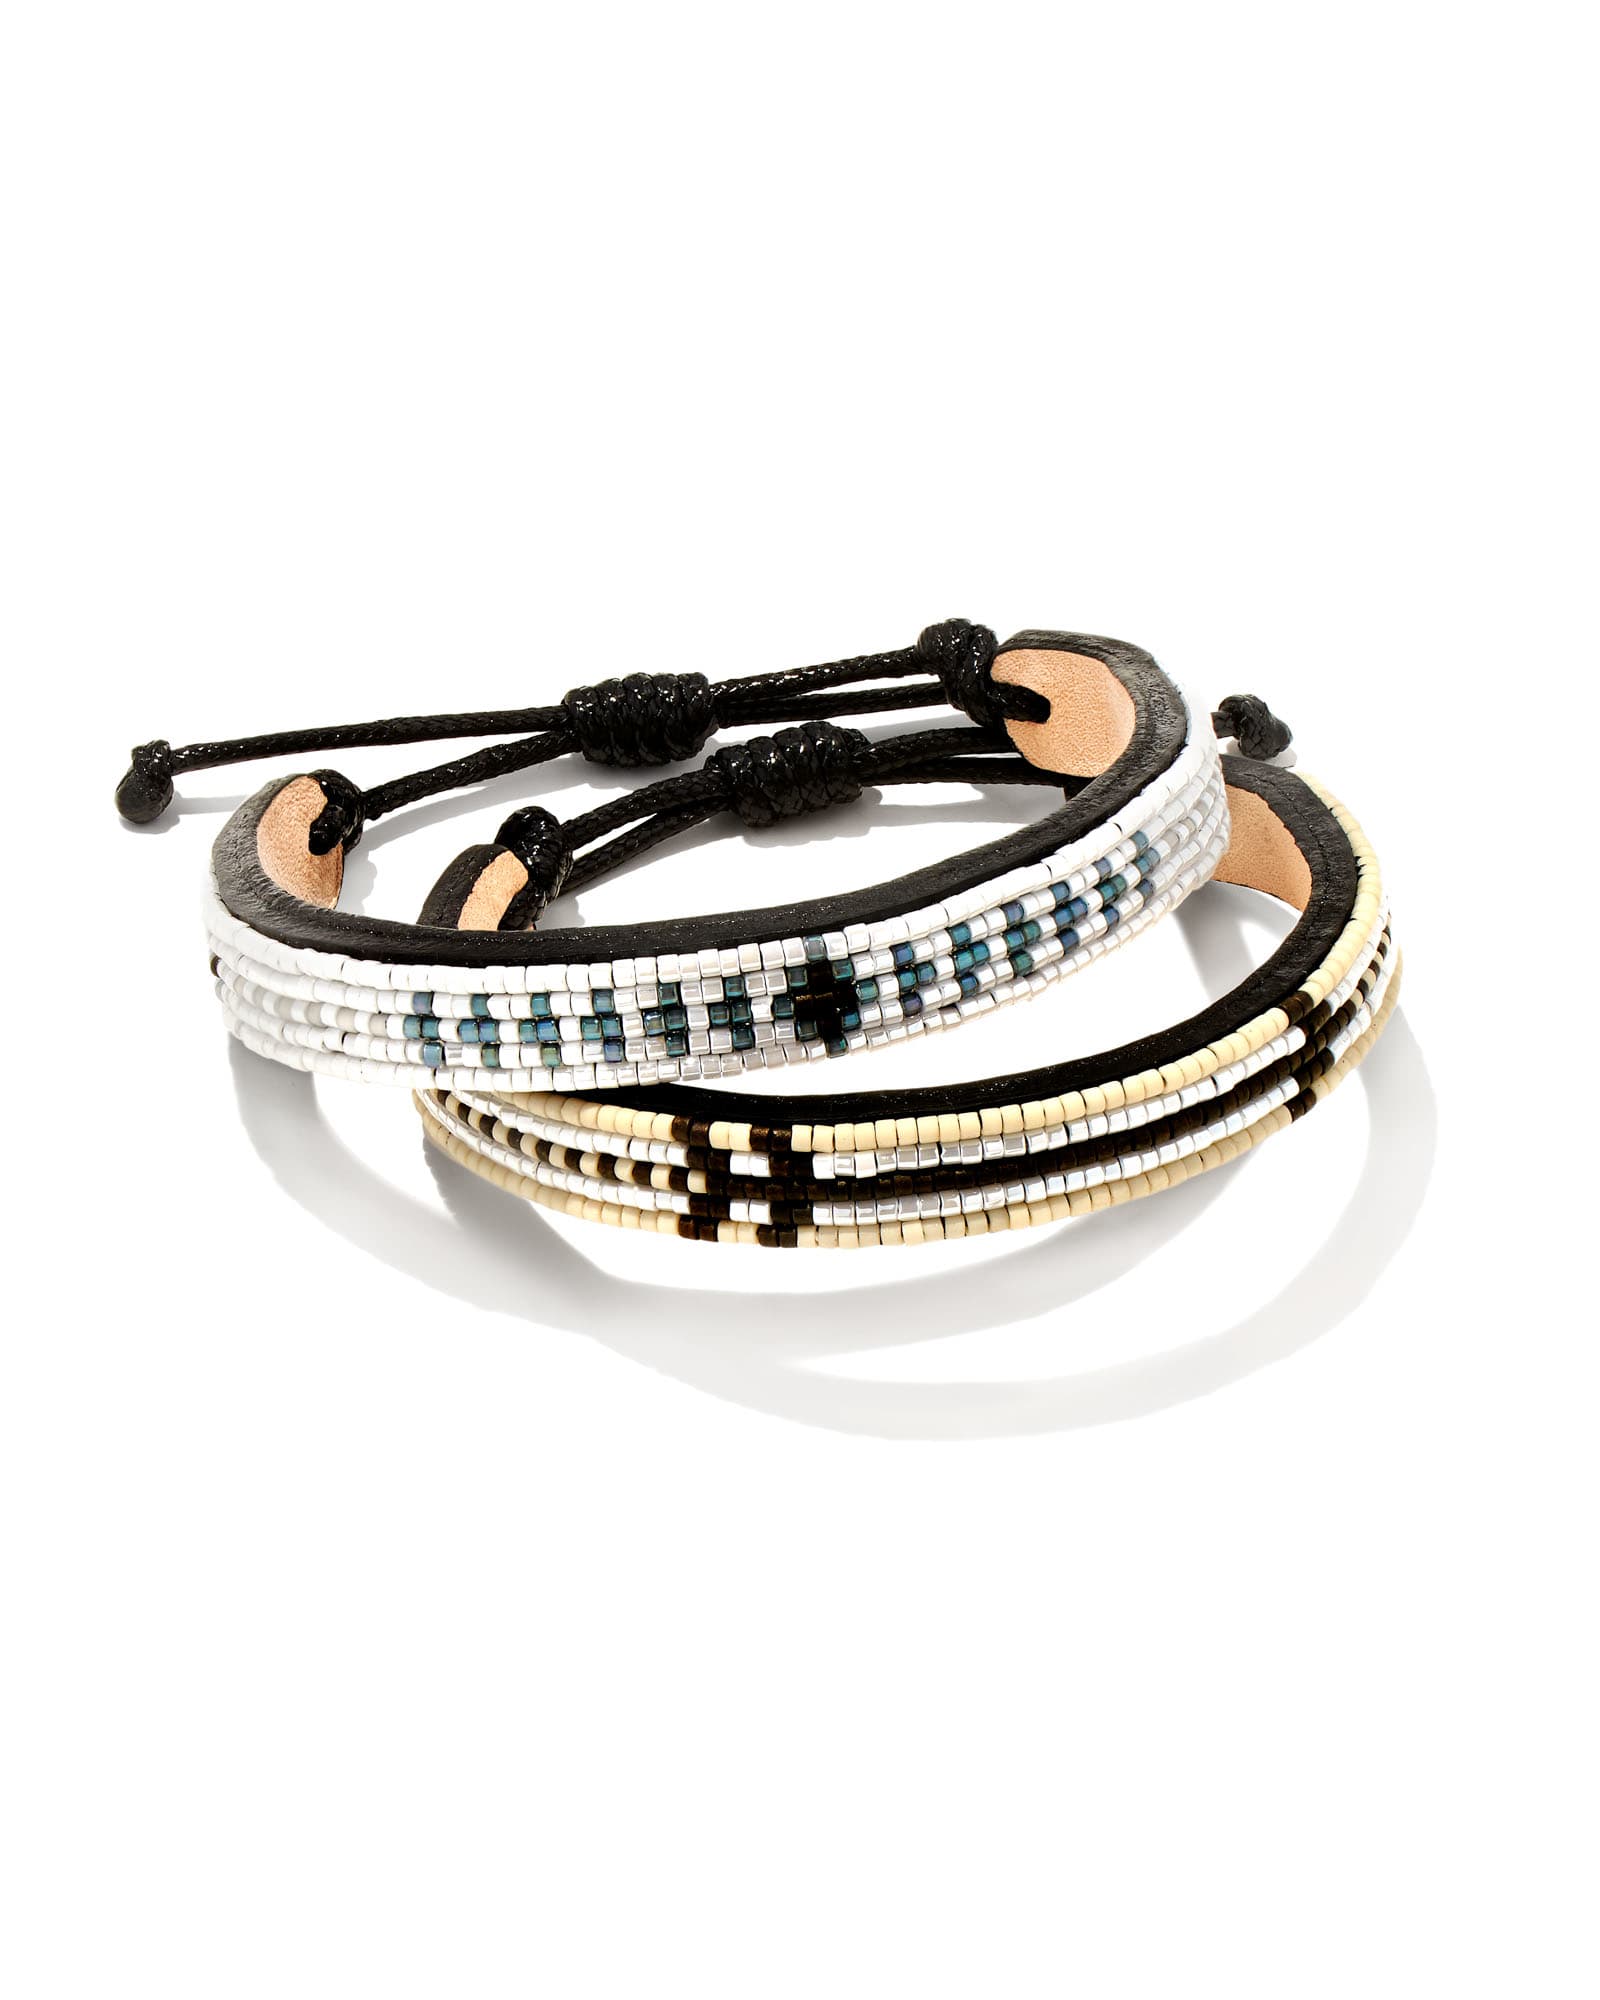 Kendra Scott Shawn Beaded Friendship Bracelets Set of 2 in White Mix | Miyuki Delica Beads/Leather